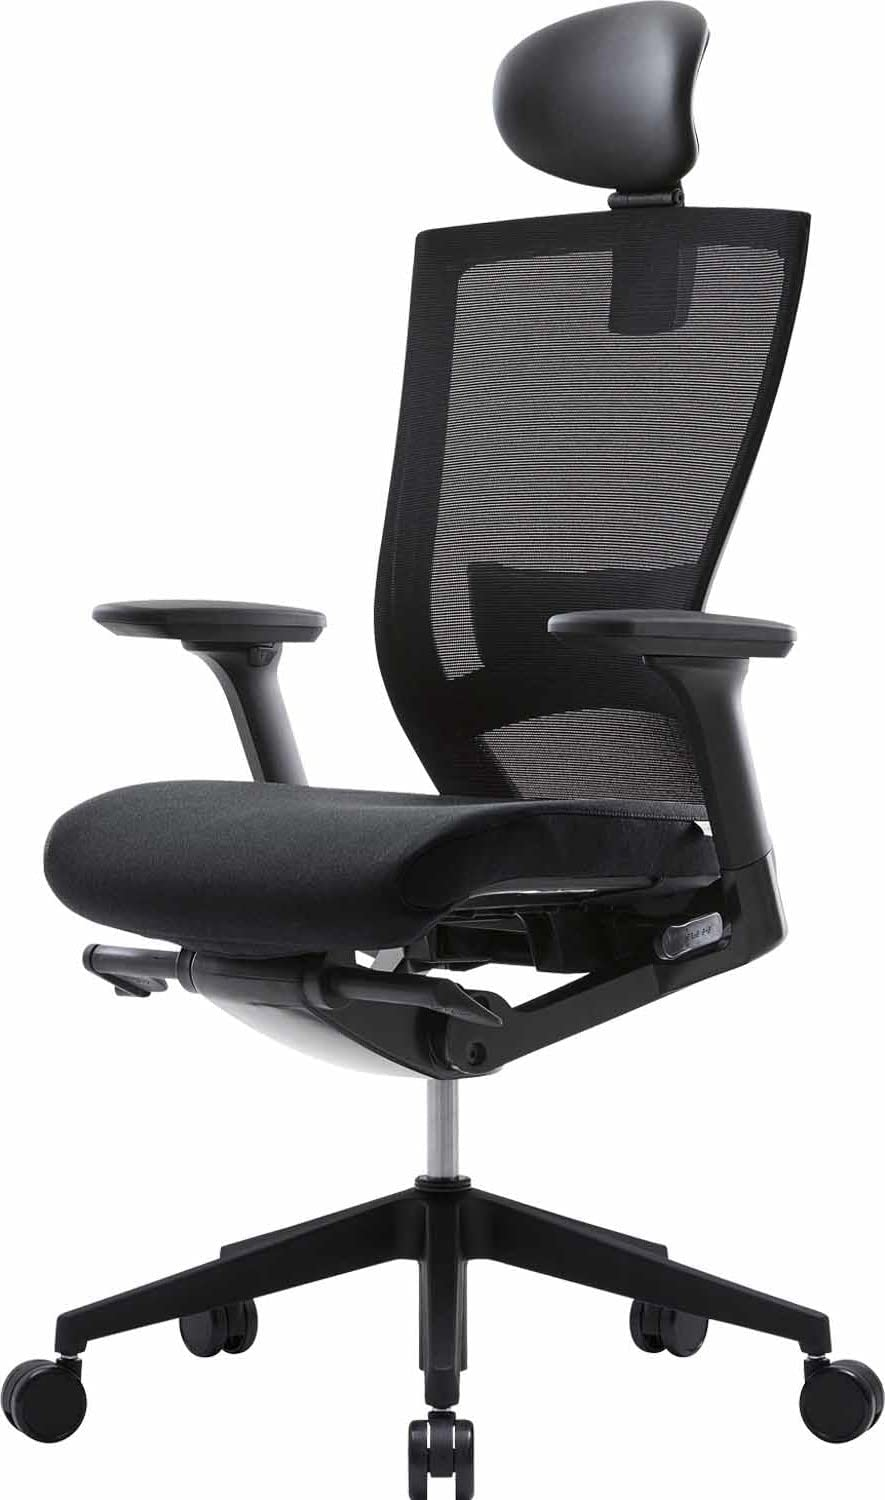 SIDIZ T50 office chair under 500